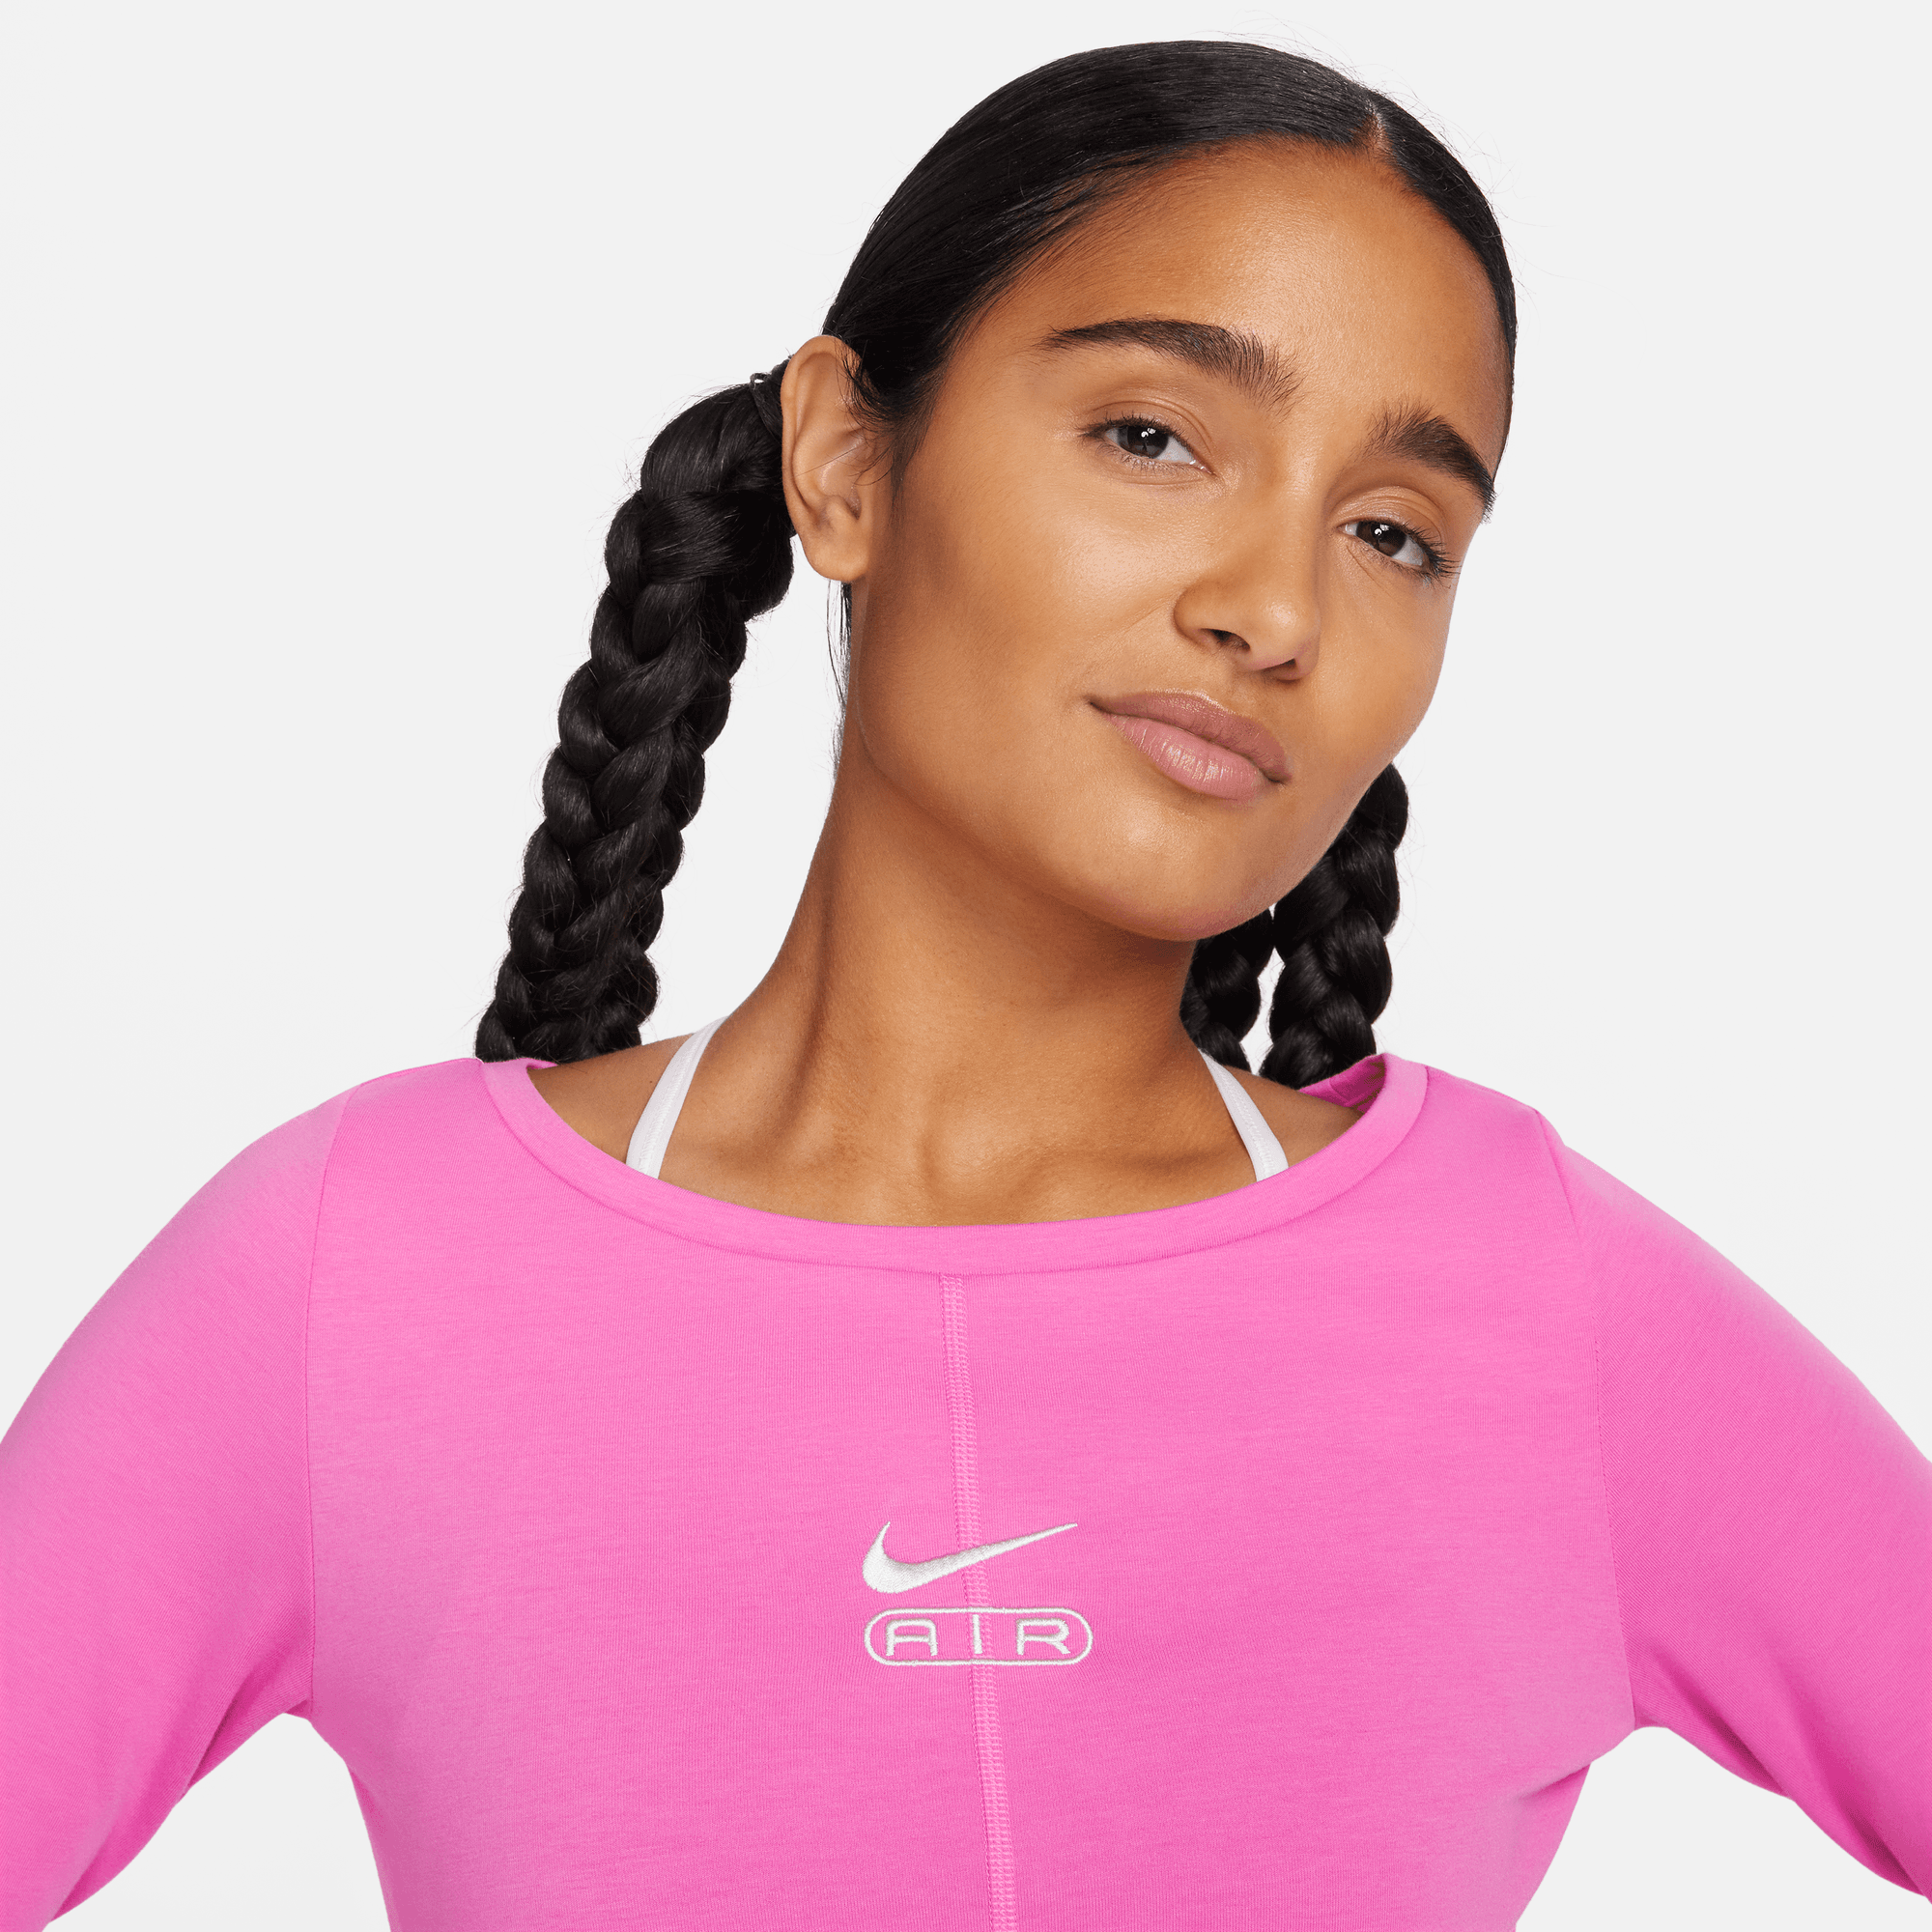 Nike Air Women's Playful Pink Long-Sleeve Top